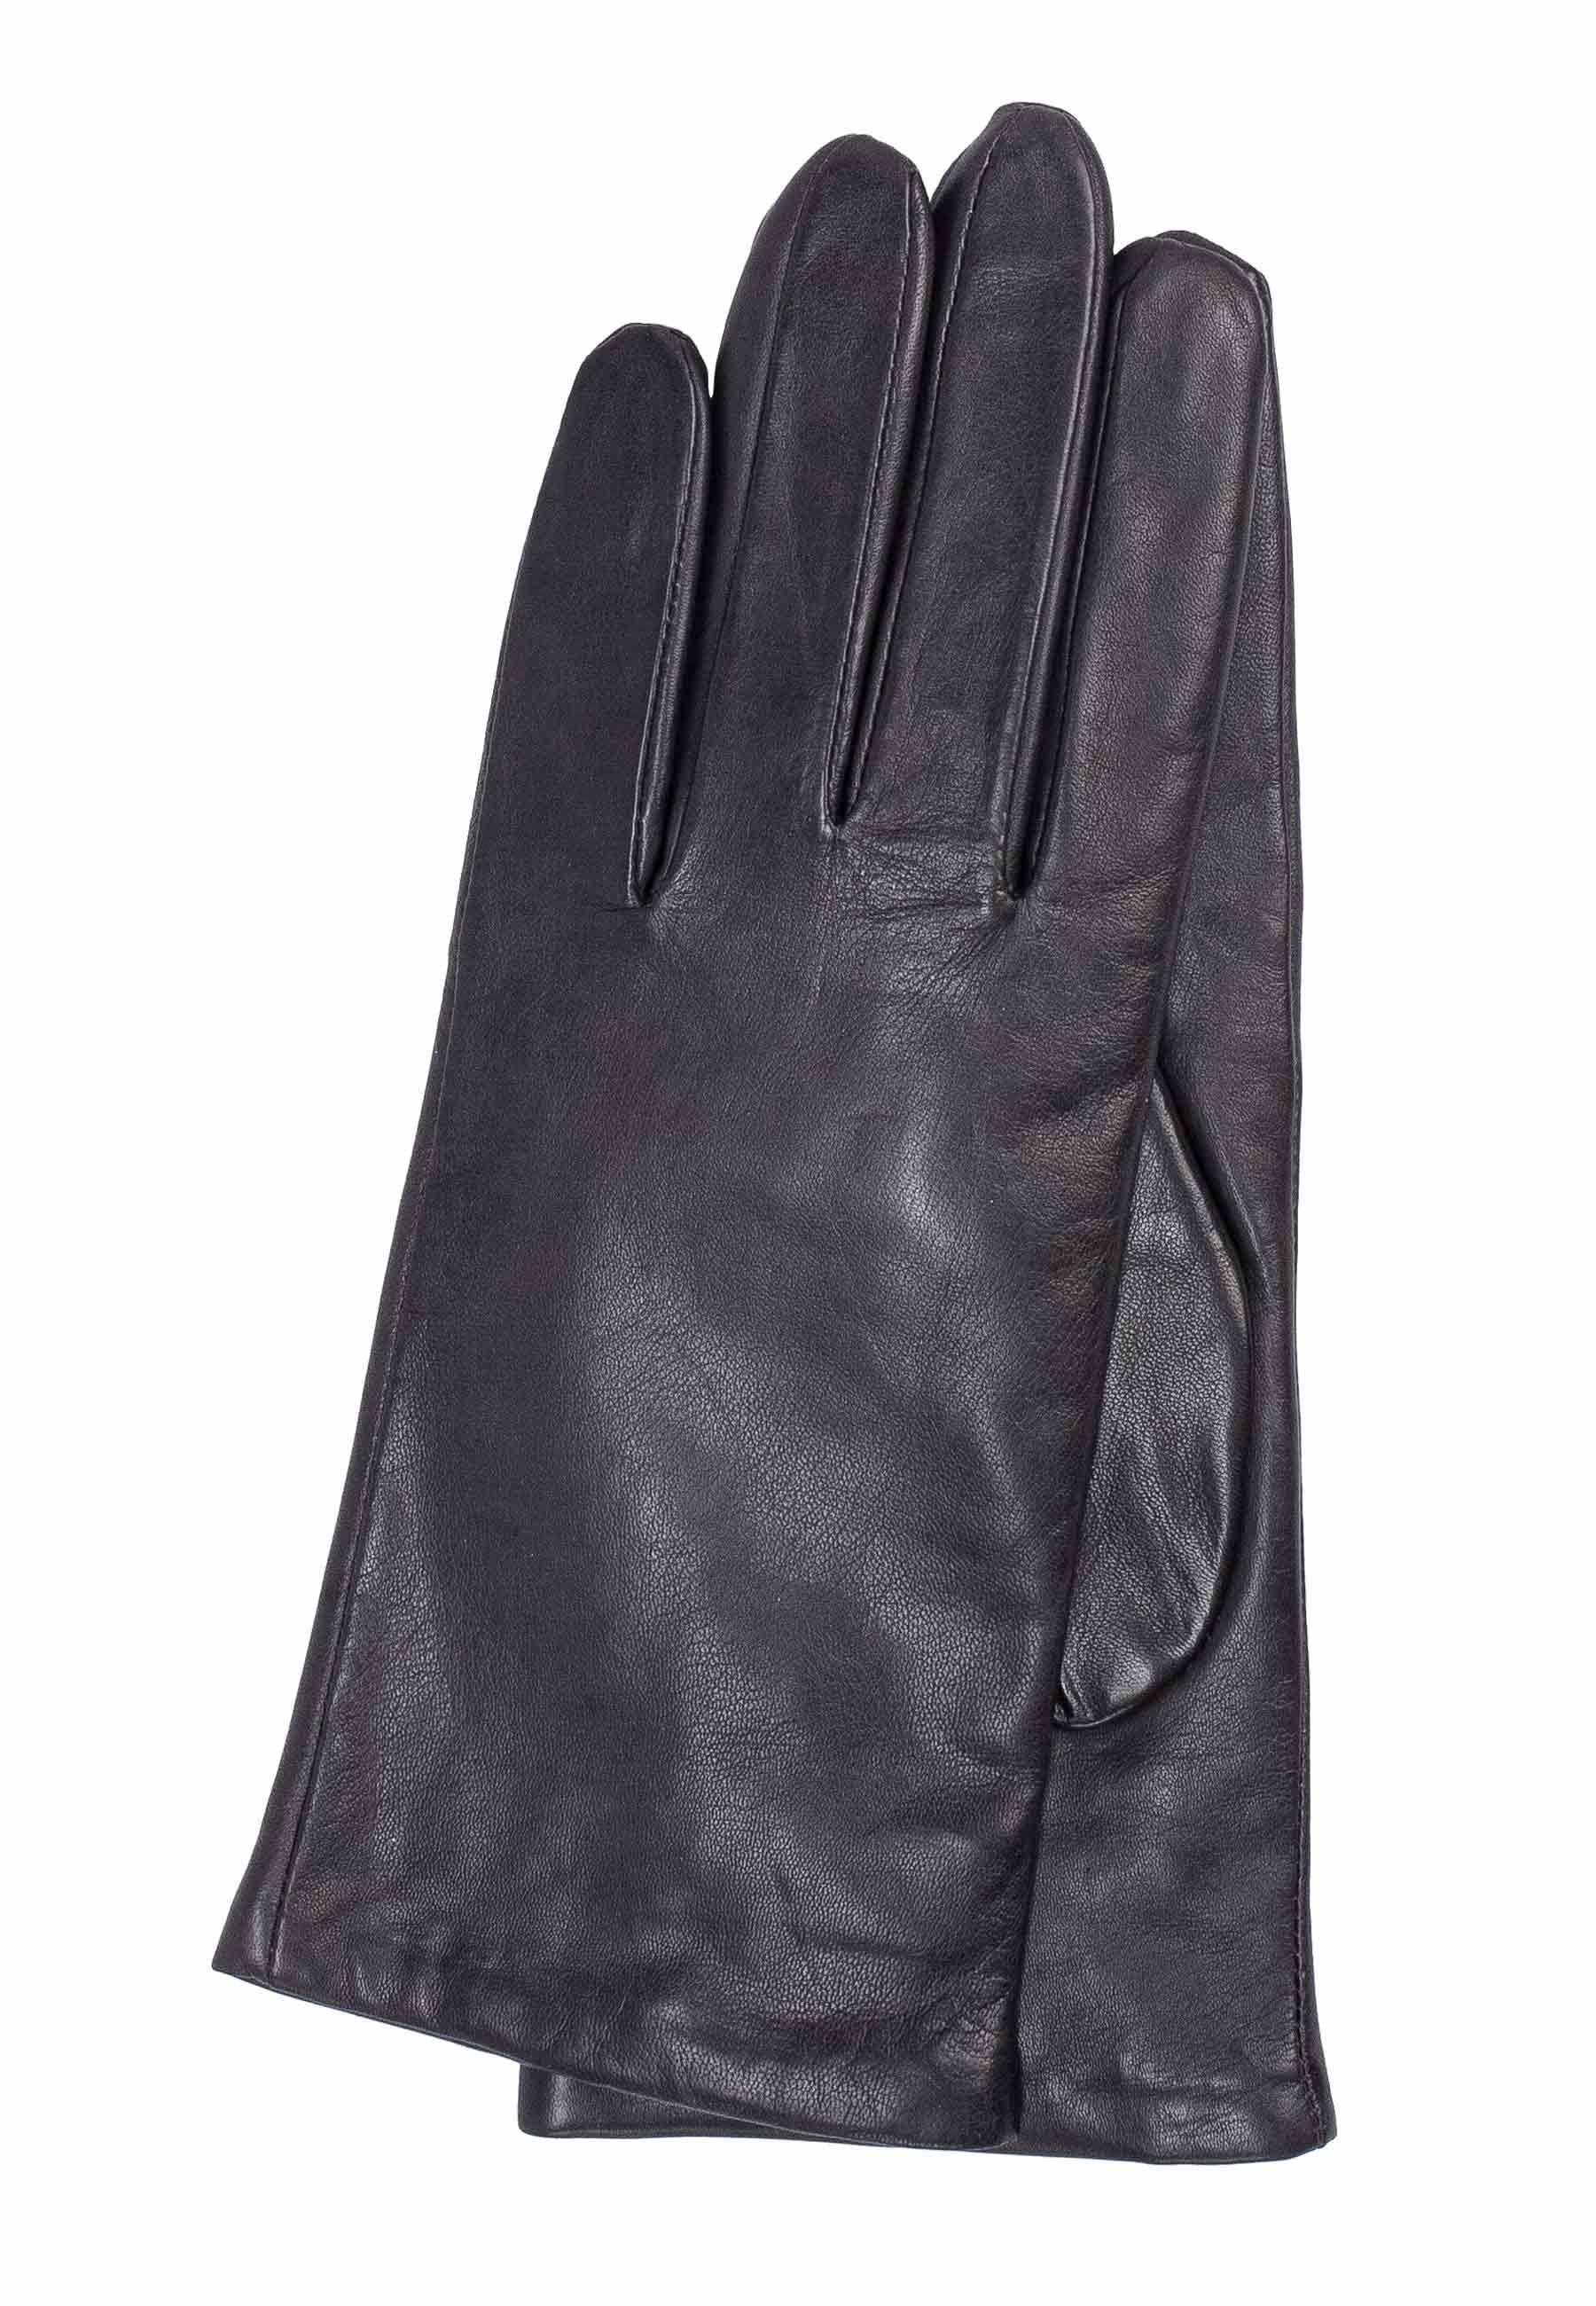 GRETCHEN Lederhandschuhe Women´s Glove grau Lammnappa aus Pura